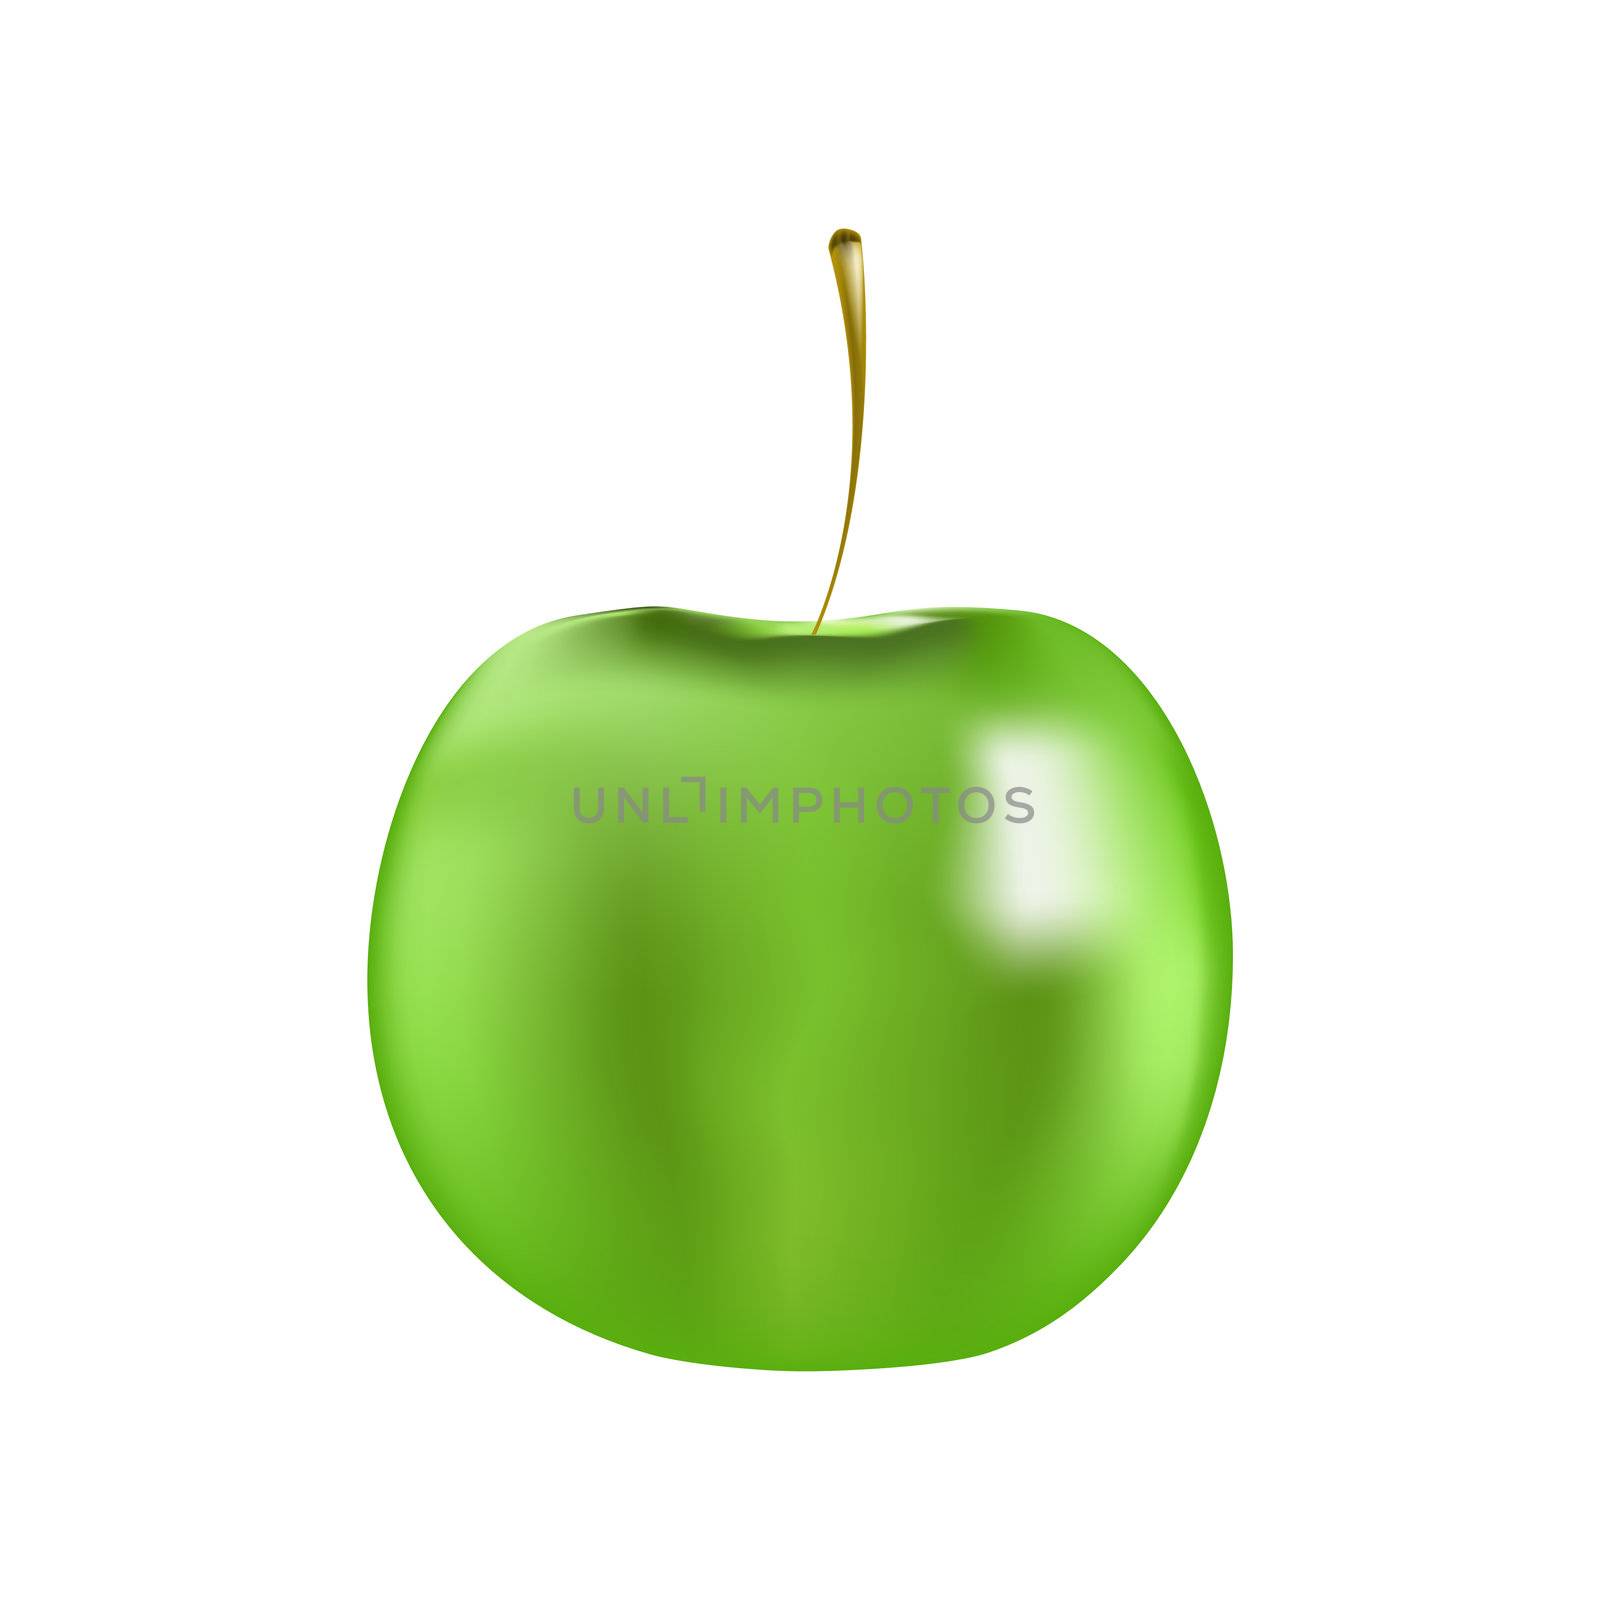 Juicy green apple by sergey150770SV